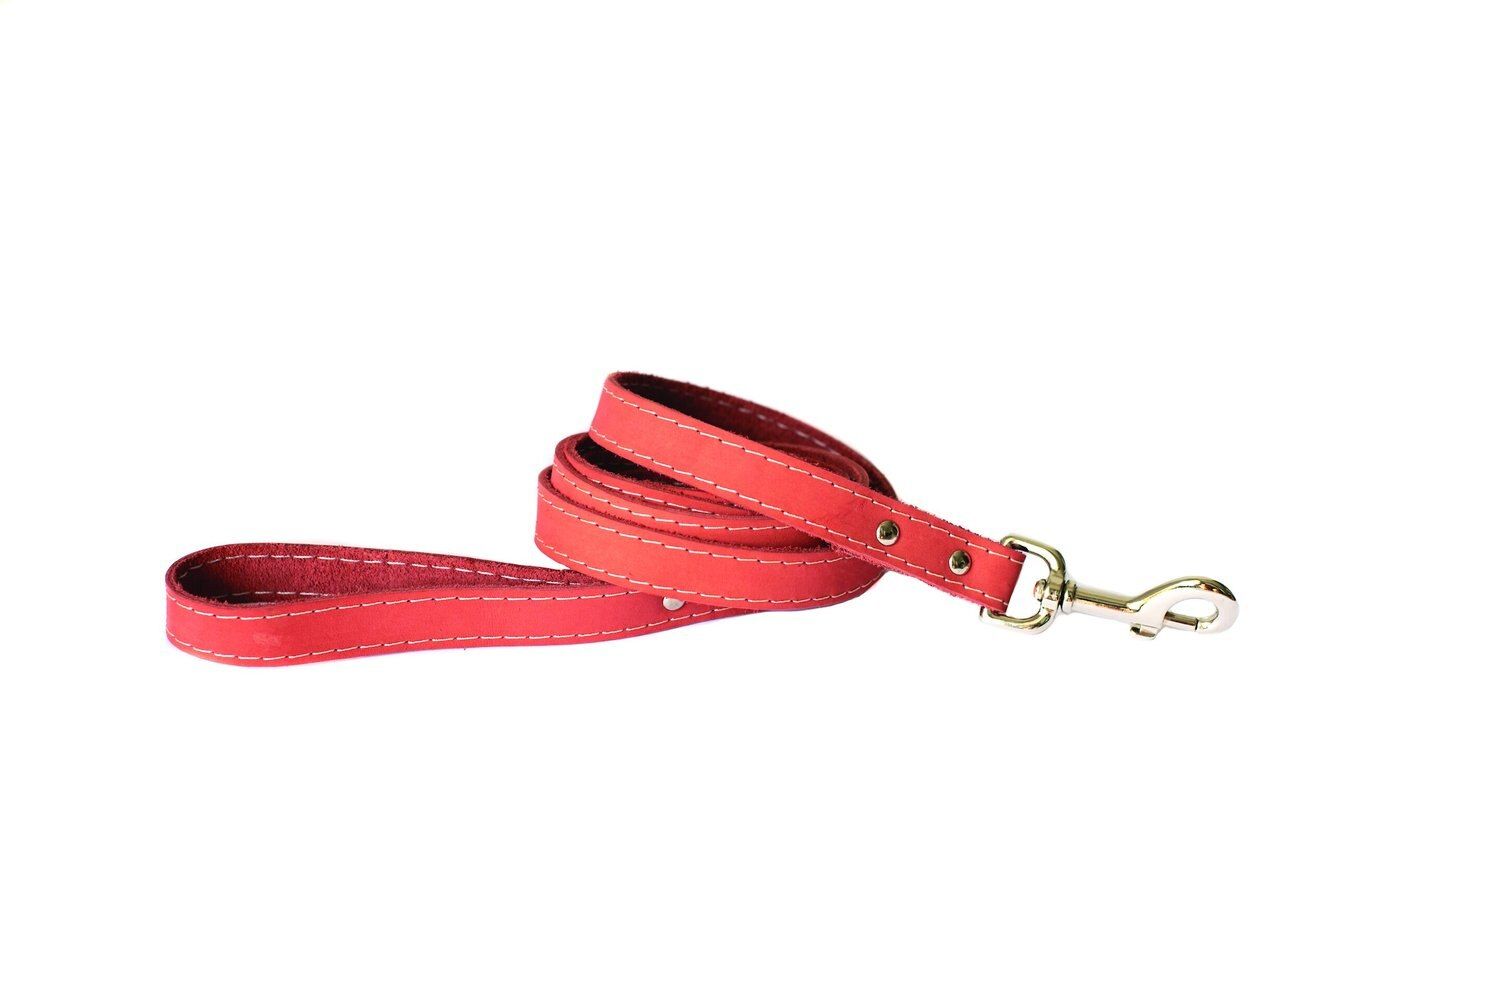 Euro-Dog Leather Dog Leash | Chewy.com